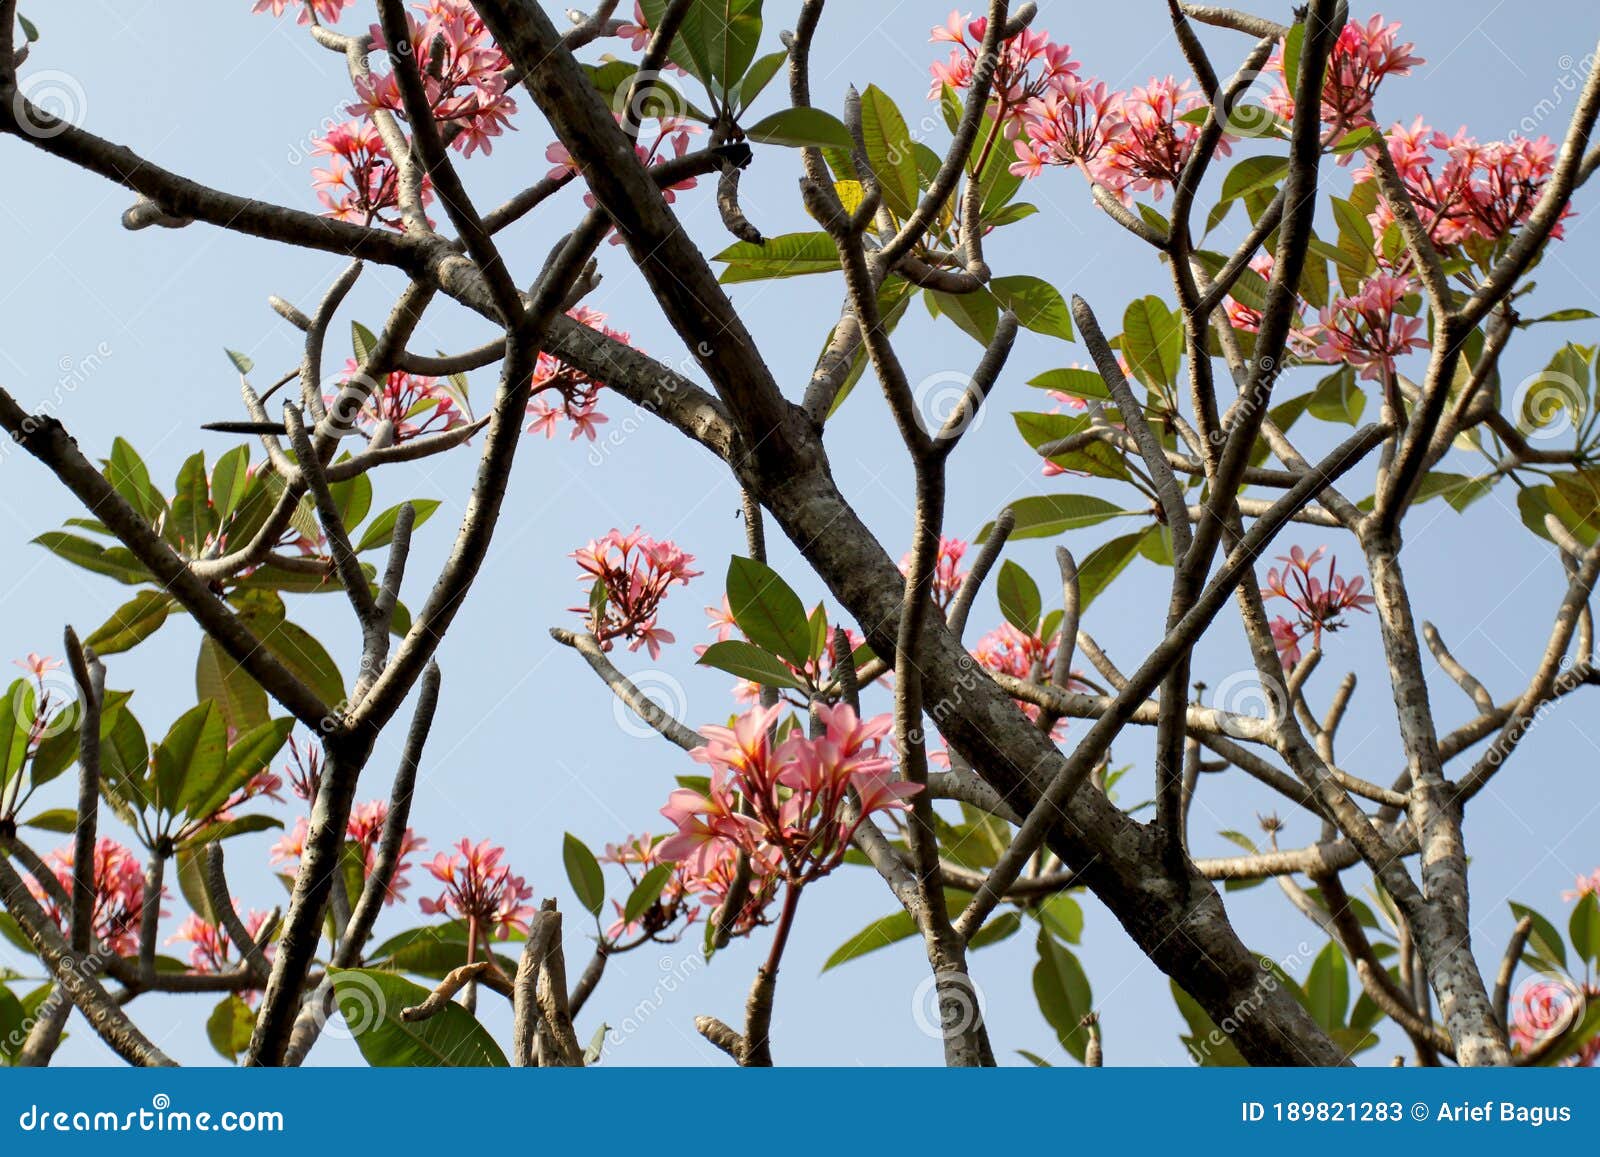 Bunga Kamboja Pink or Frangipani Pink Flower Stock Image - Image of ...